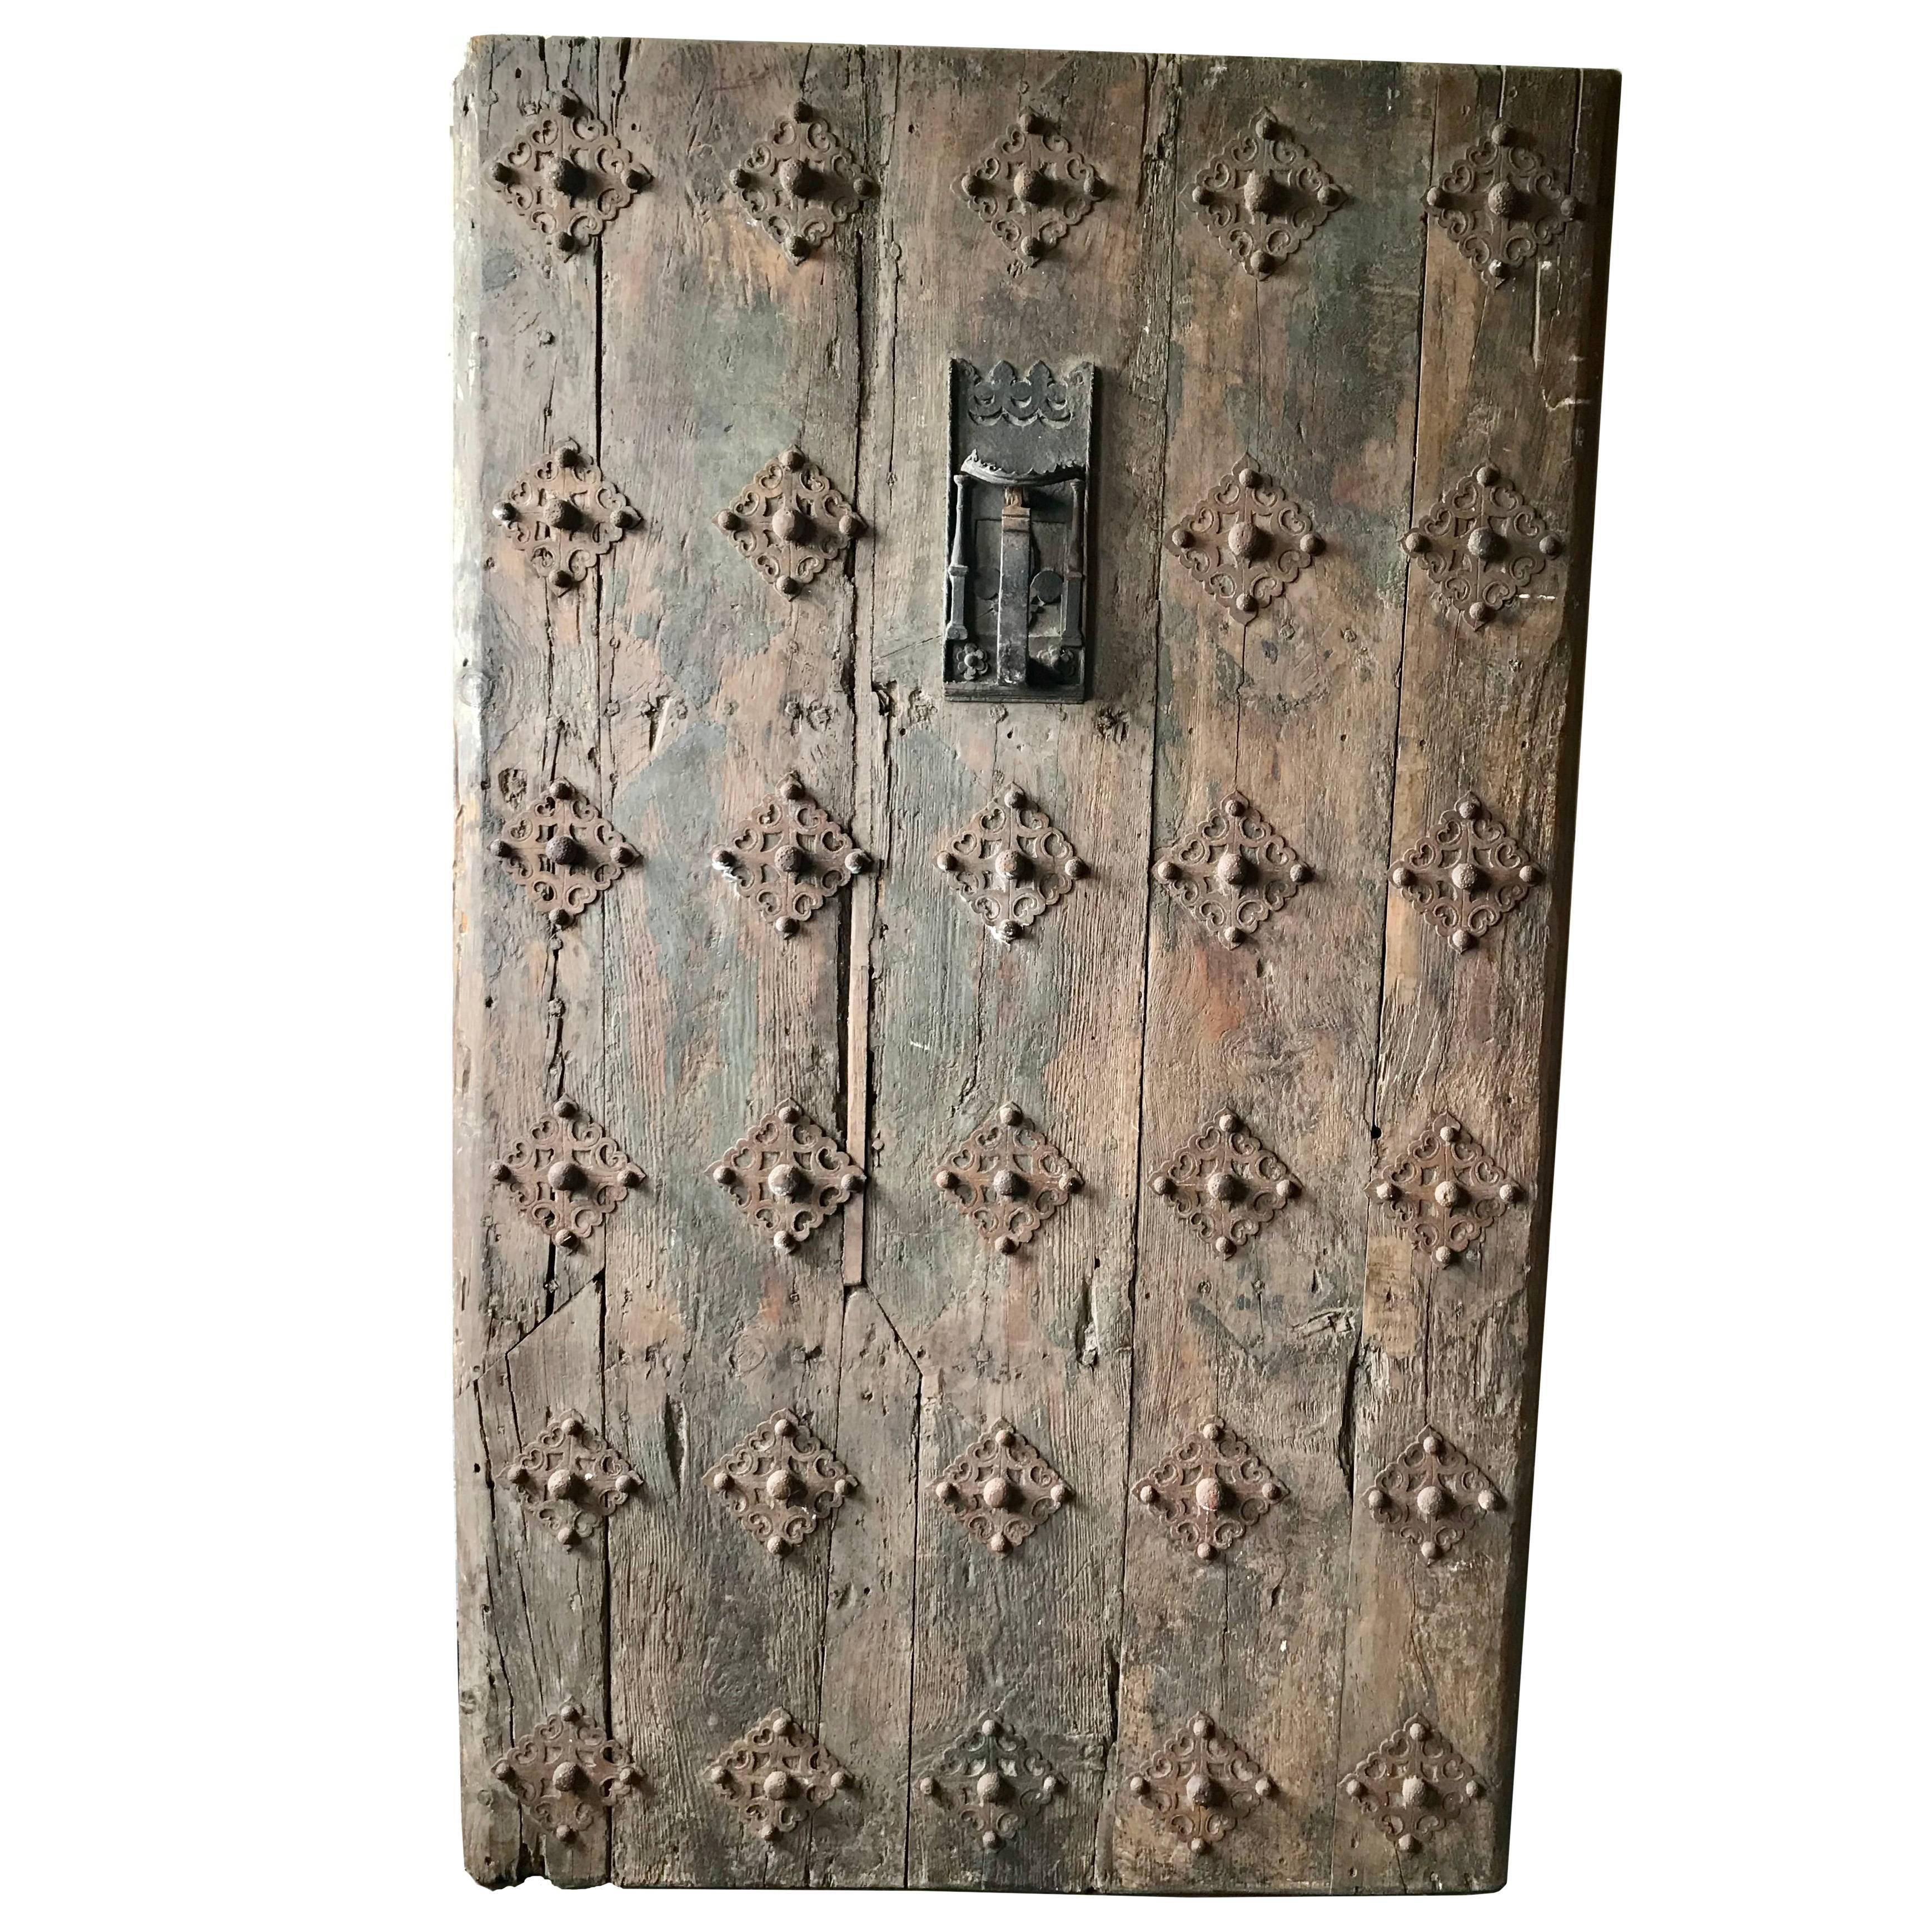 Large 17th Century Spanish Chestnut Wood Door with Iron Hardware